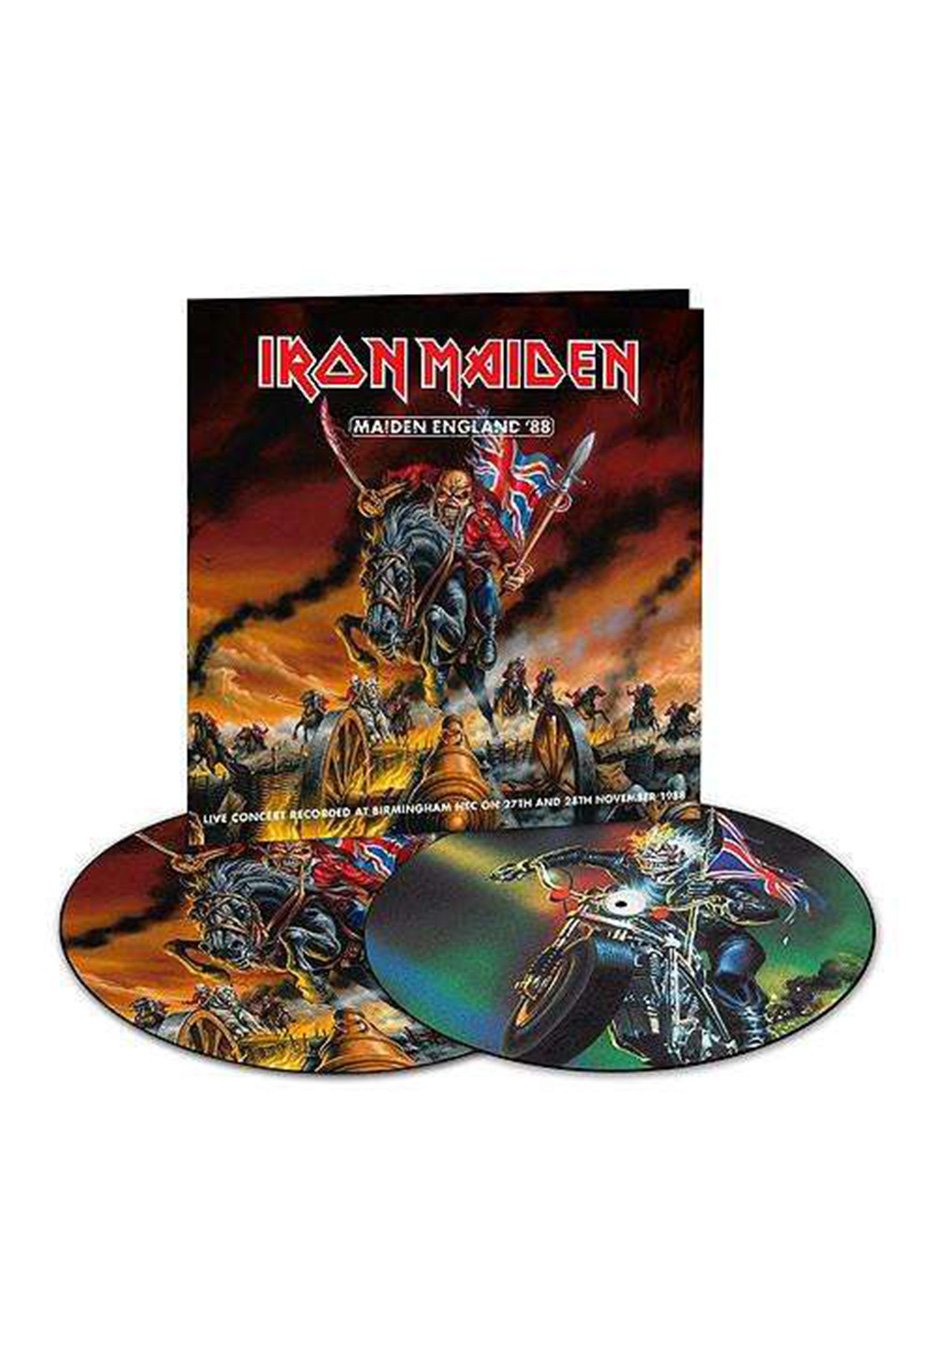 Iron Maiden - Maiden England '88 - Picture 2 Vinyl